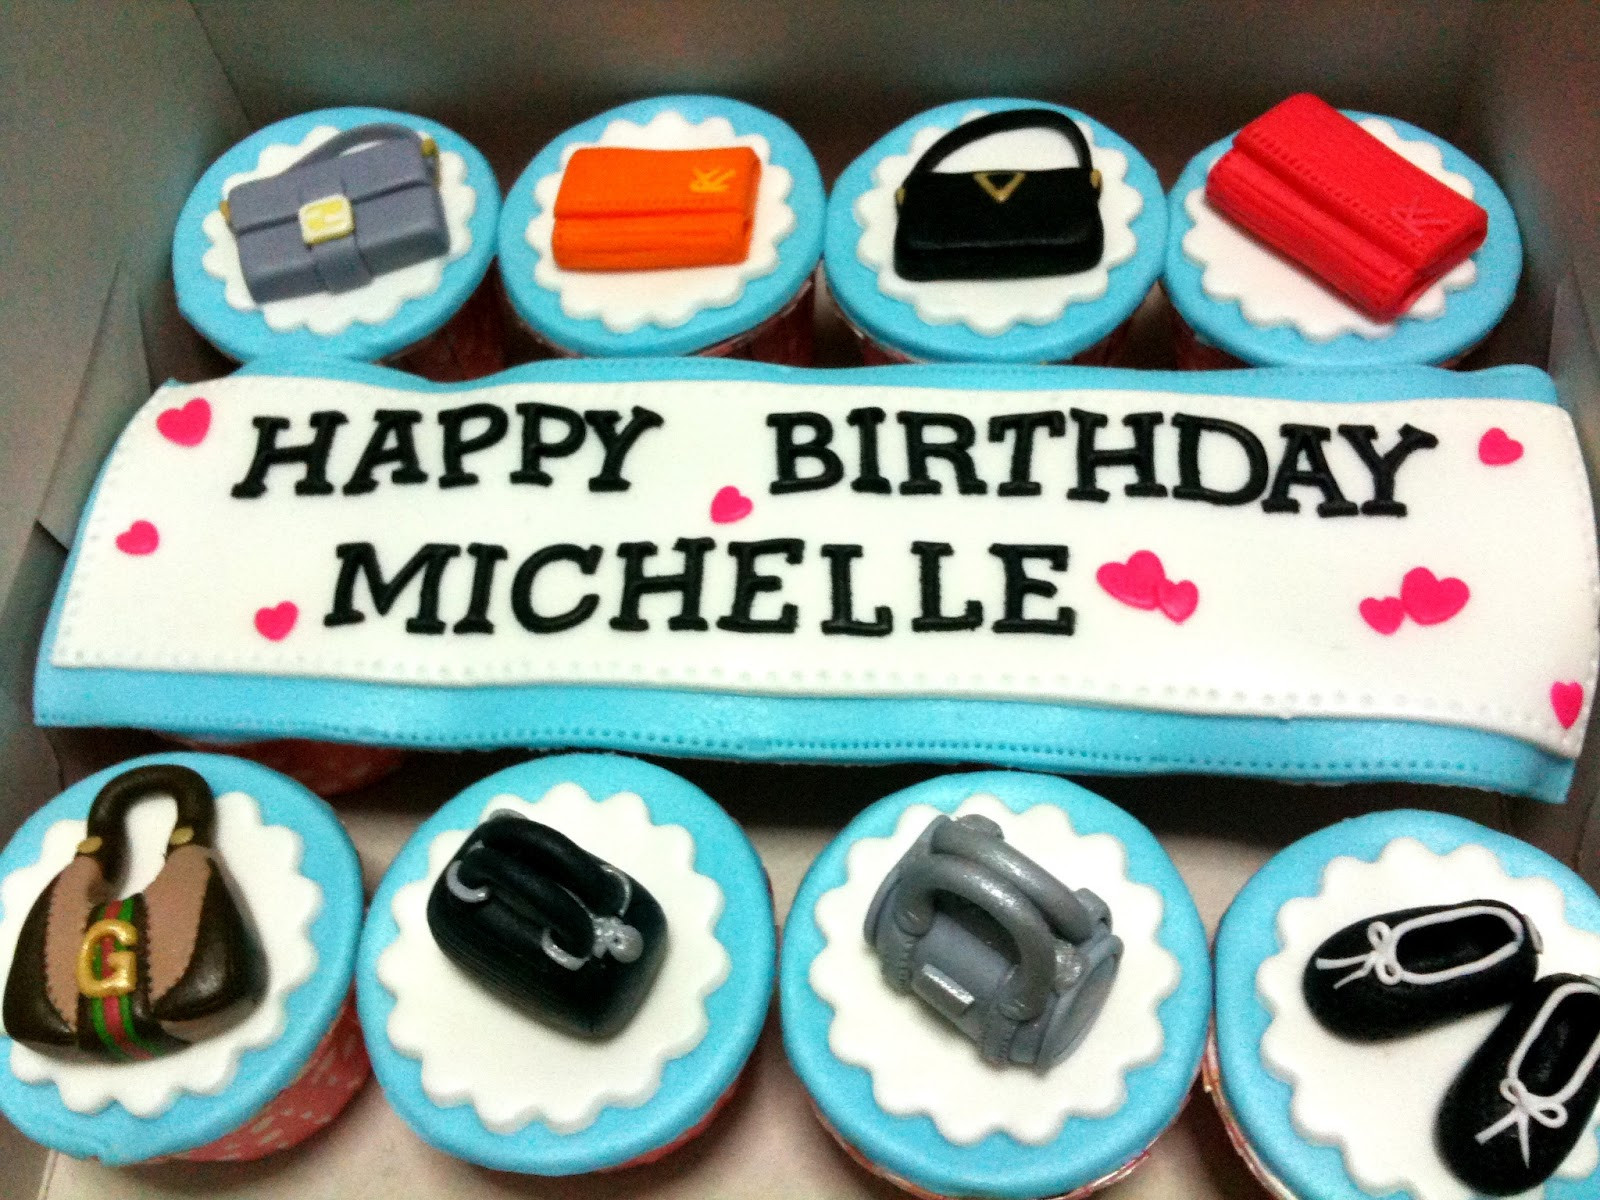 Best ideas about Happy Birthday Michelle Cake
. Save or Pin Oven Creations Happy Birthday Michelle Now.